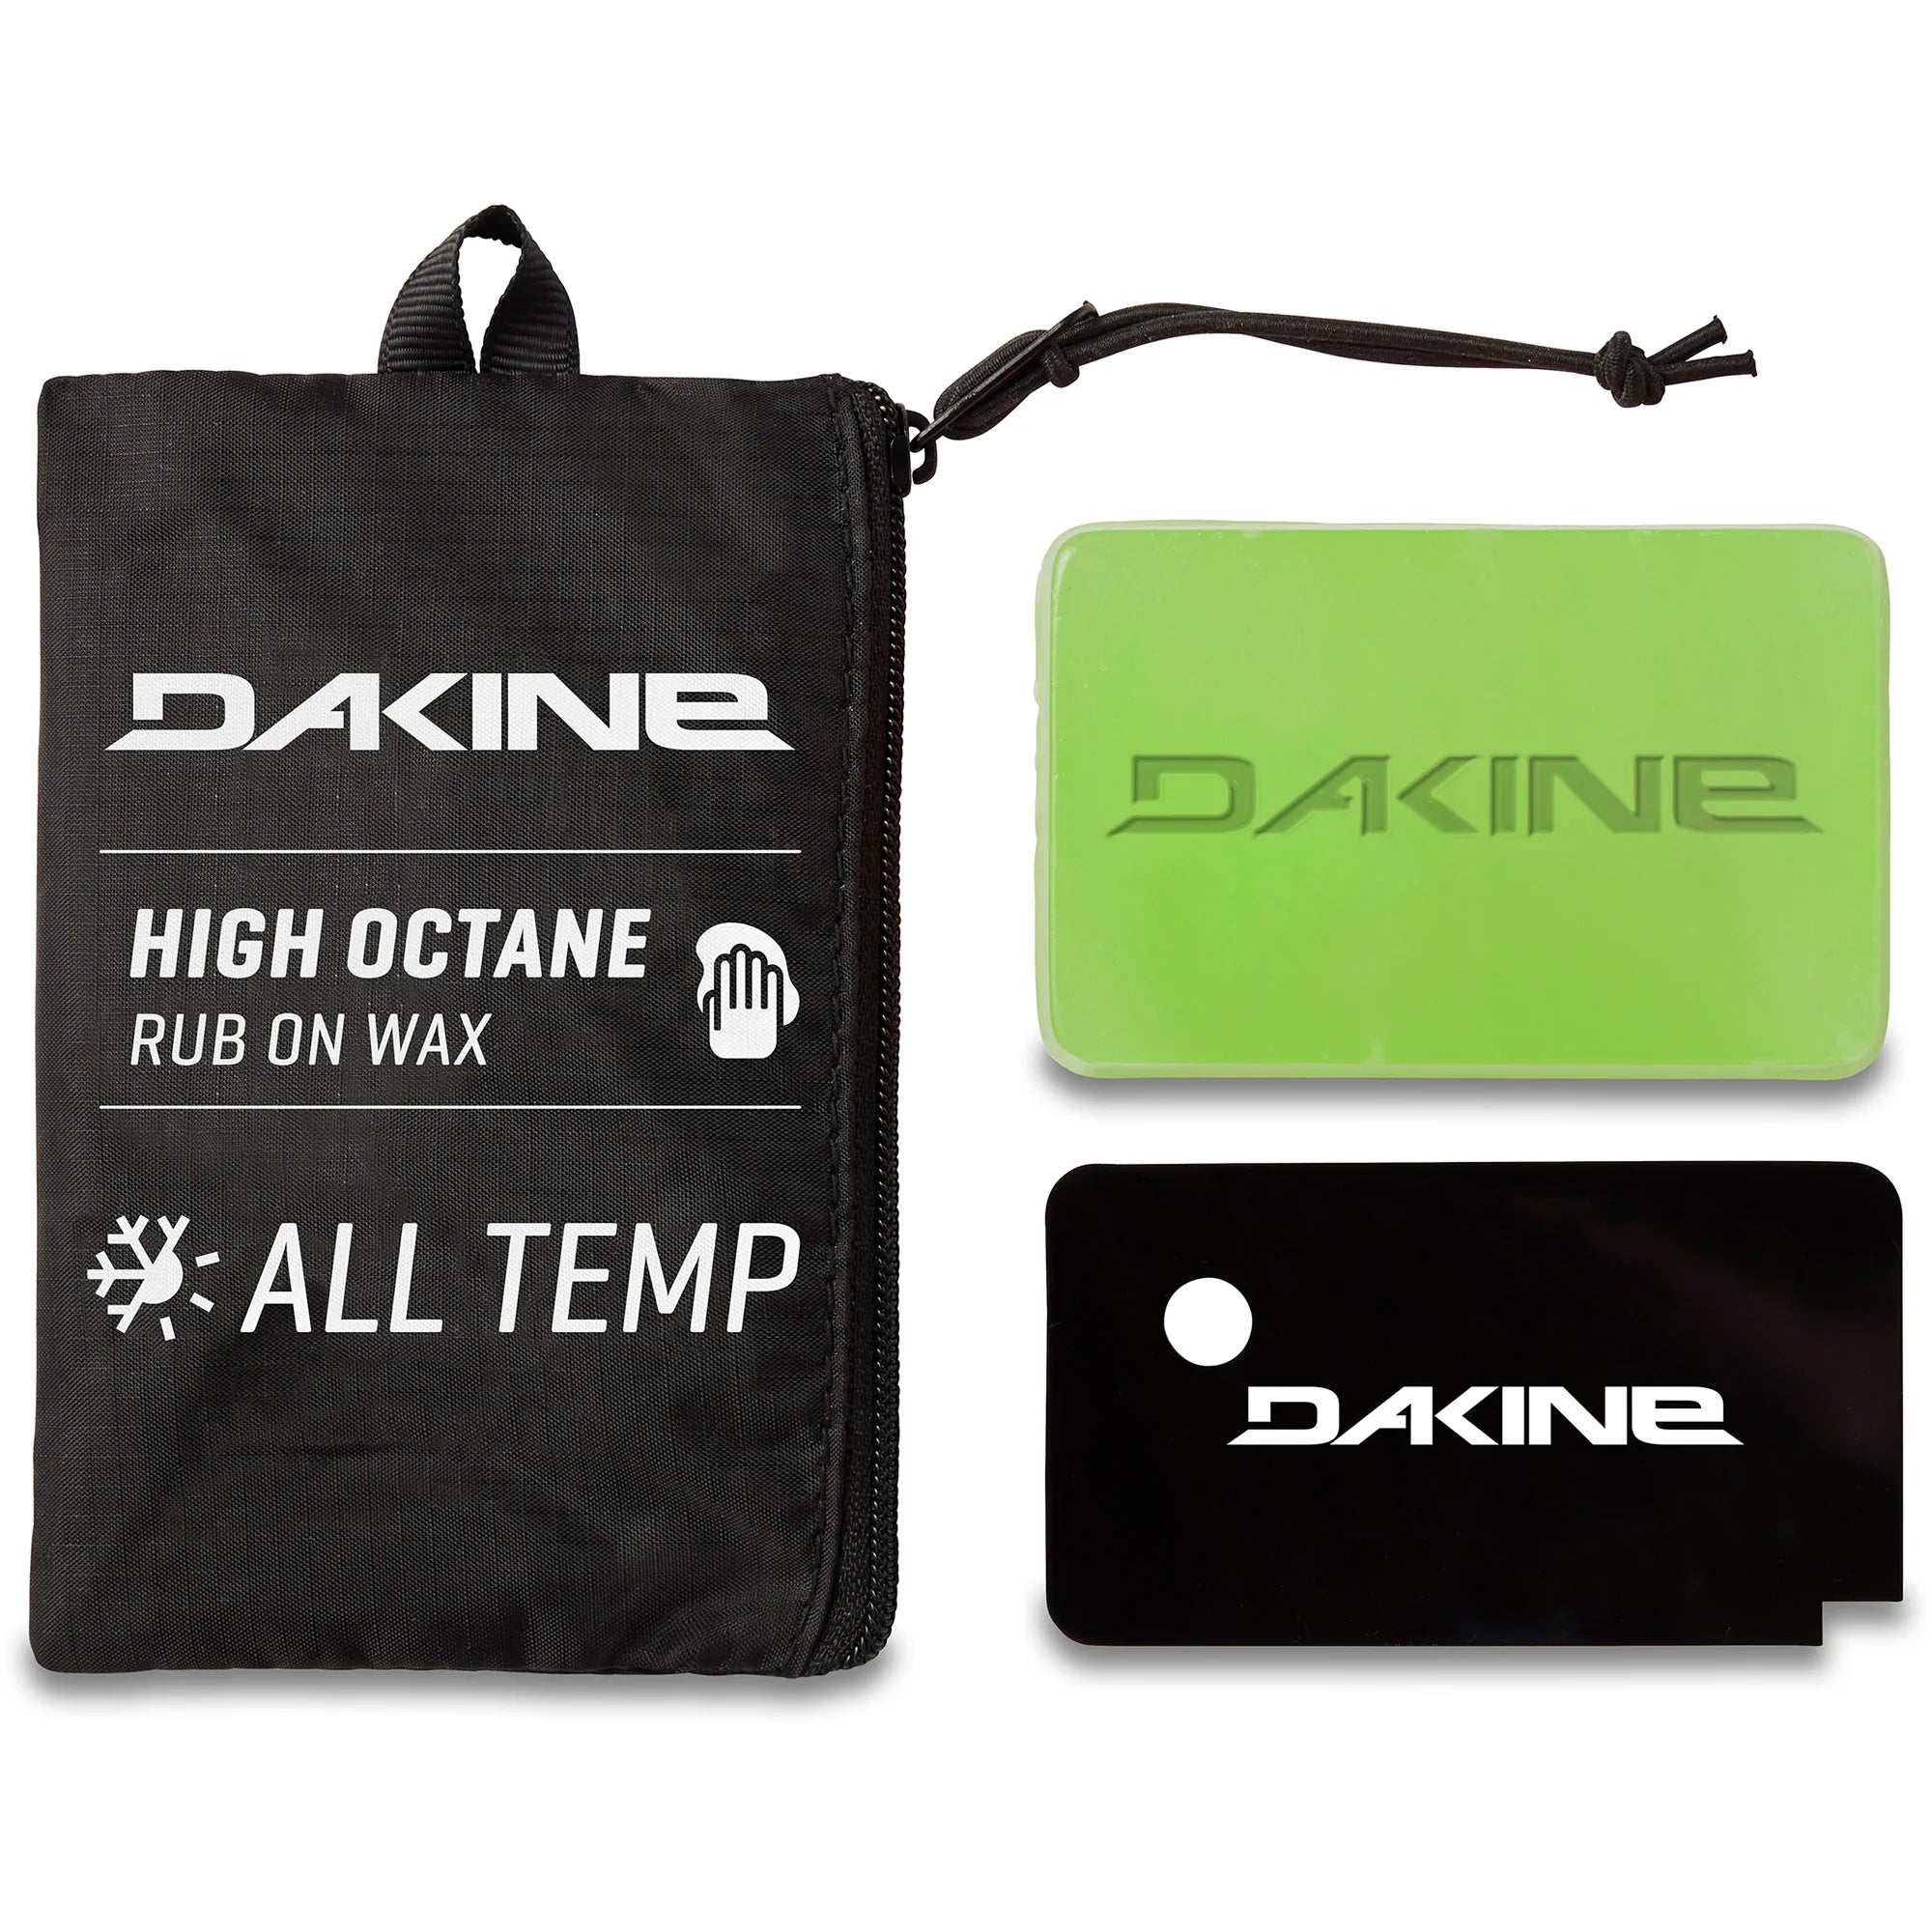 Dakine High Octane Rub On Wax (All Temp)